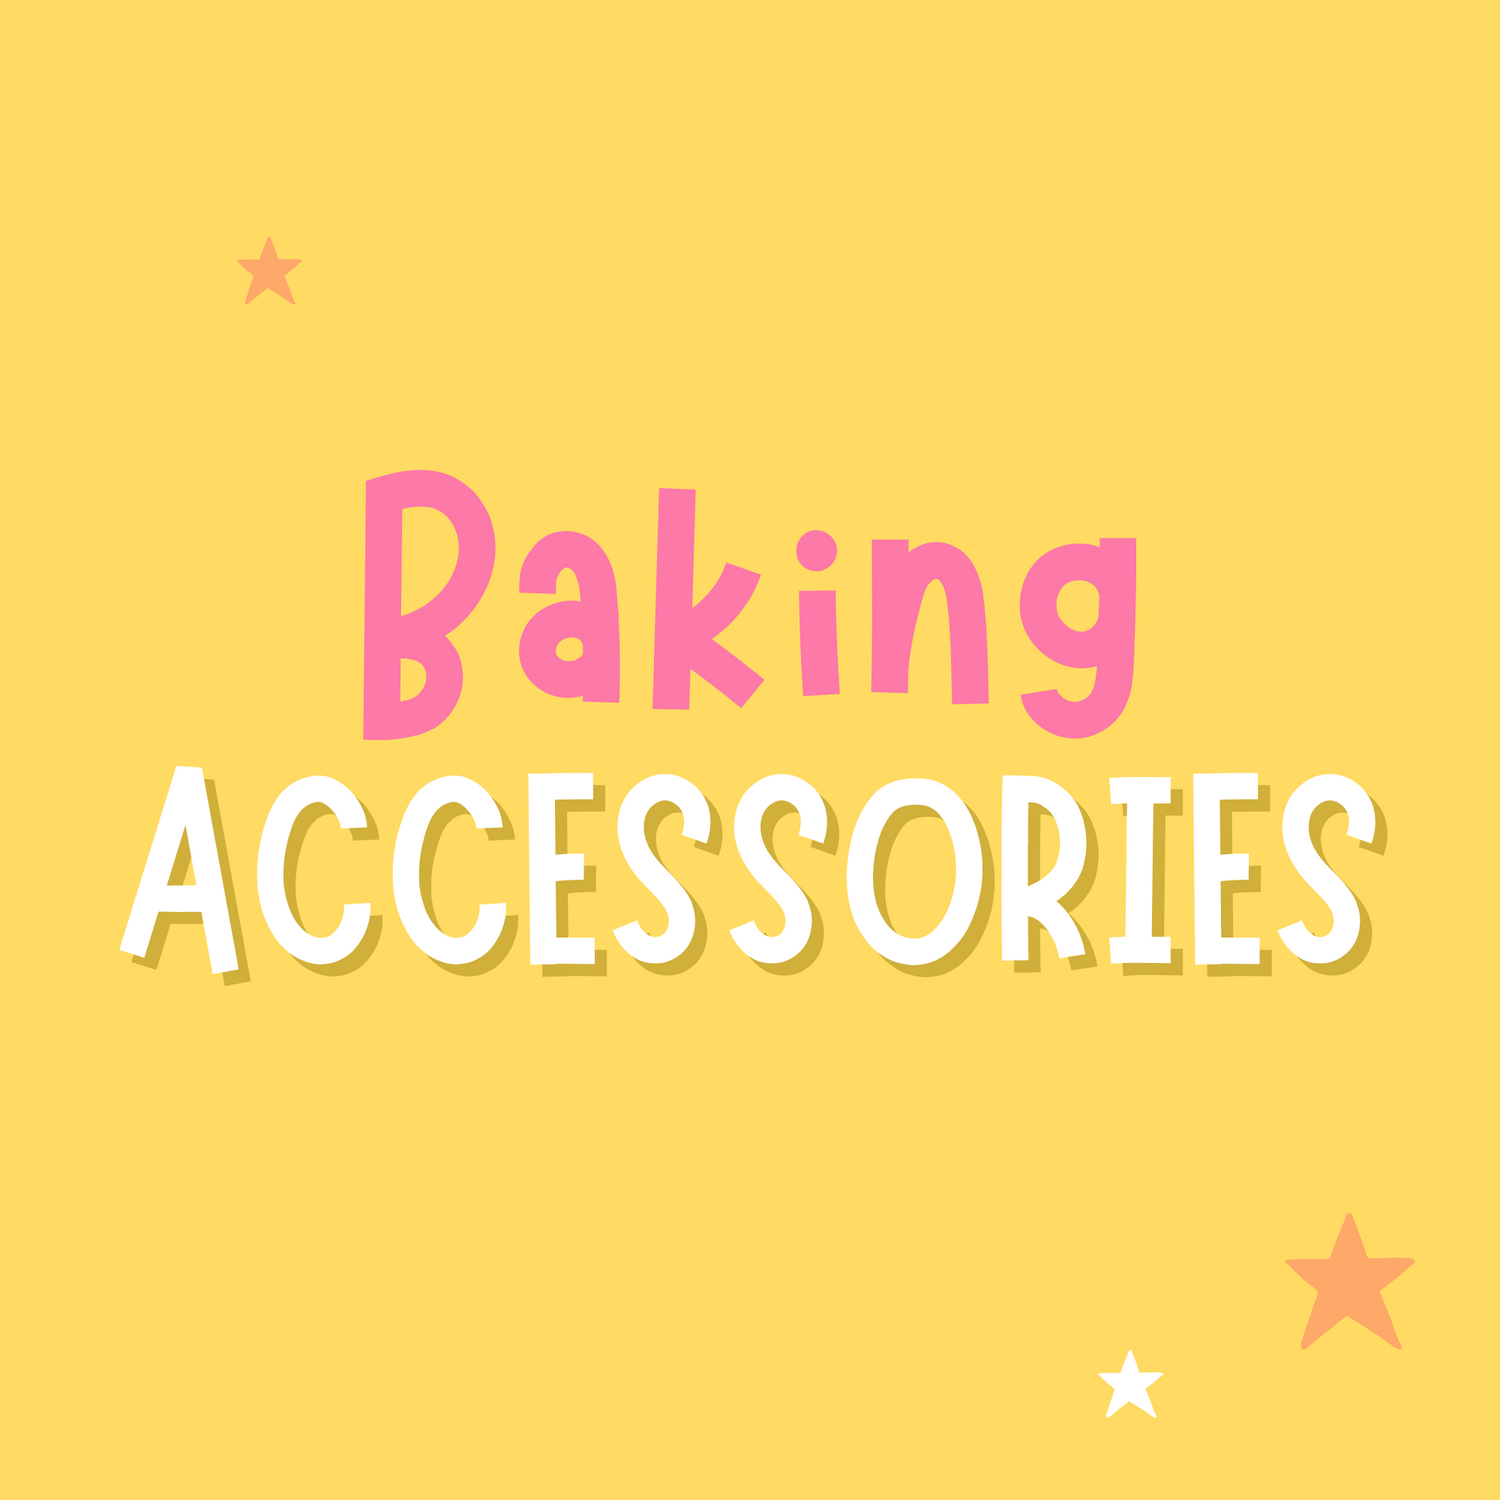 baking accessories